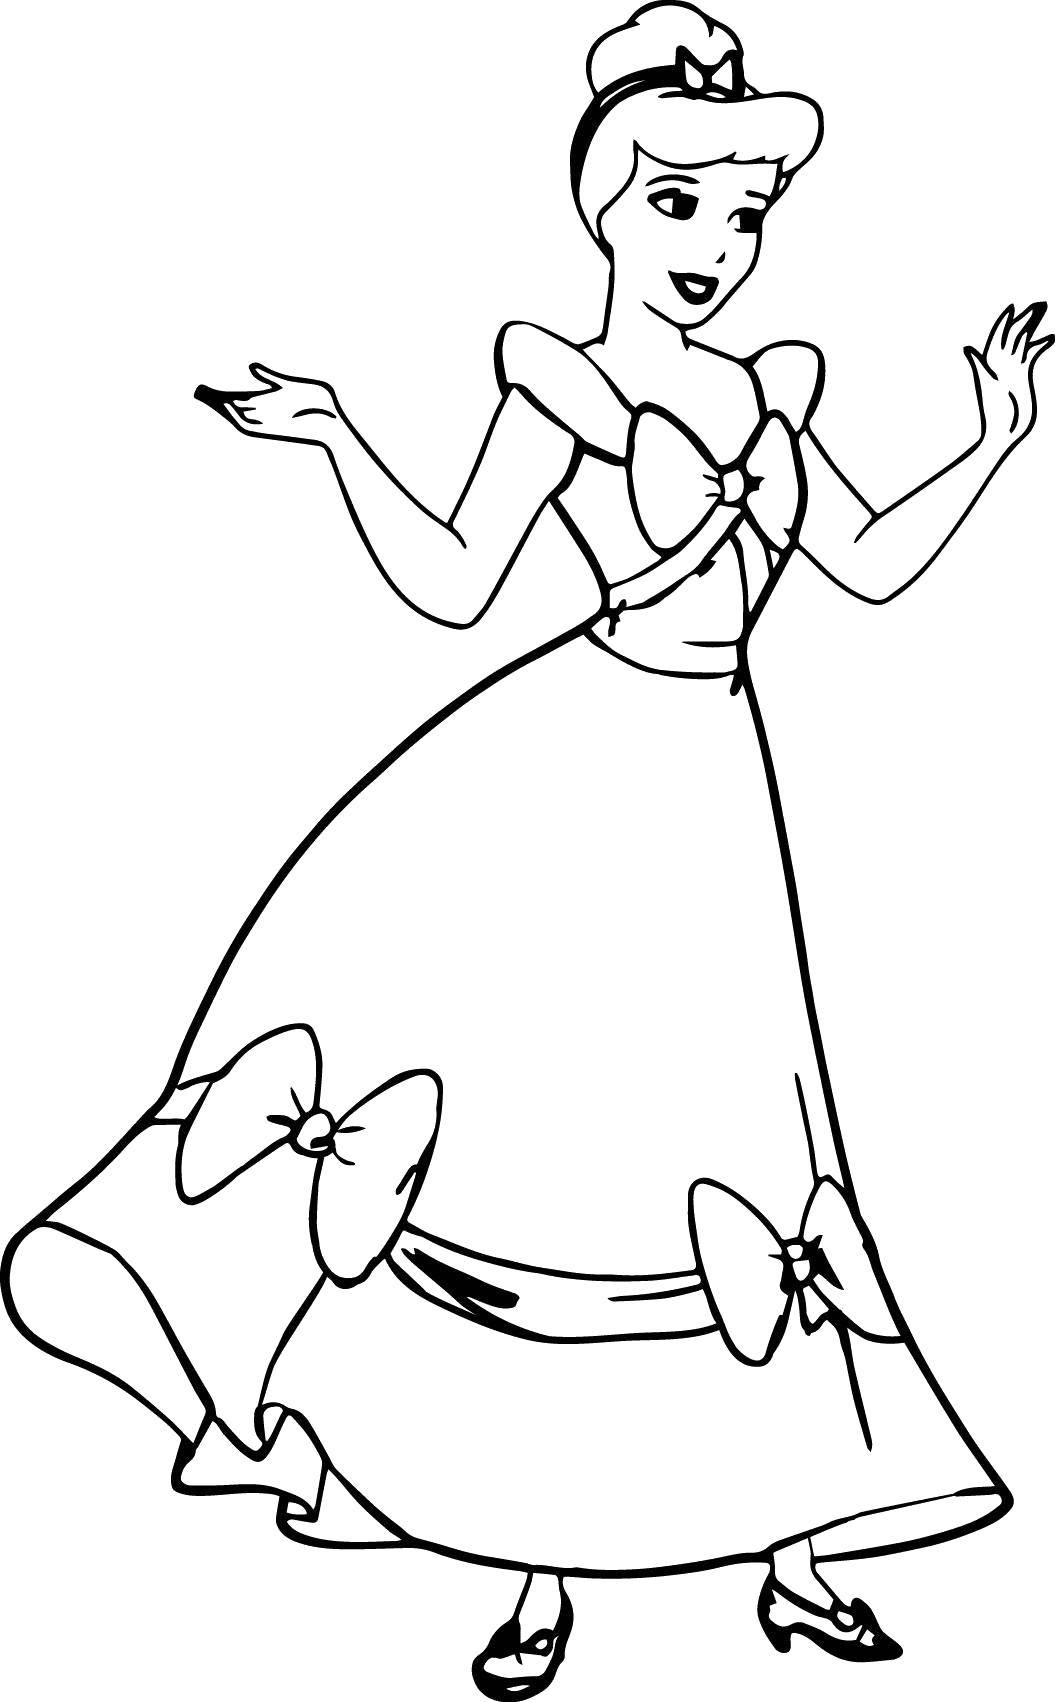 Coloring Cinderella in a beautiful dress. Category Dress. Tags:  Disney, Cinderella.